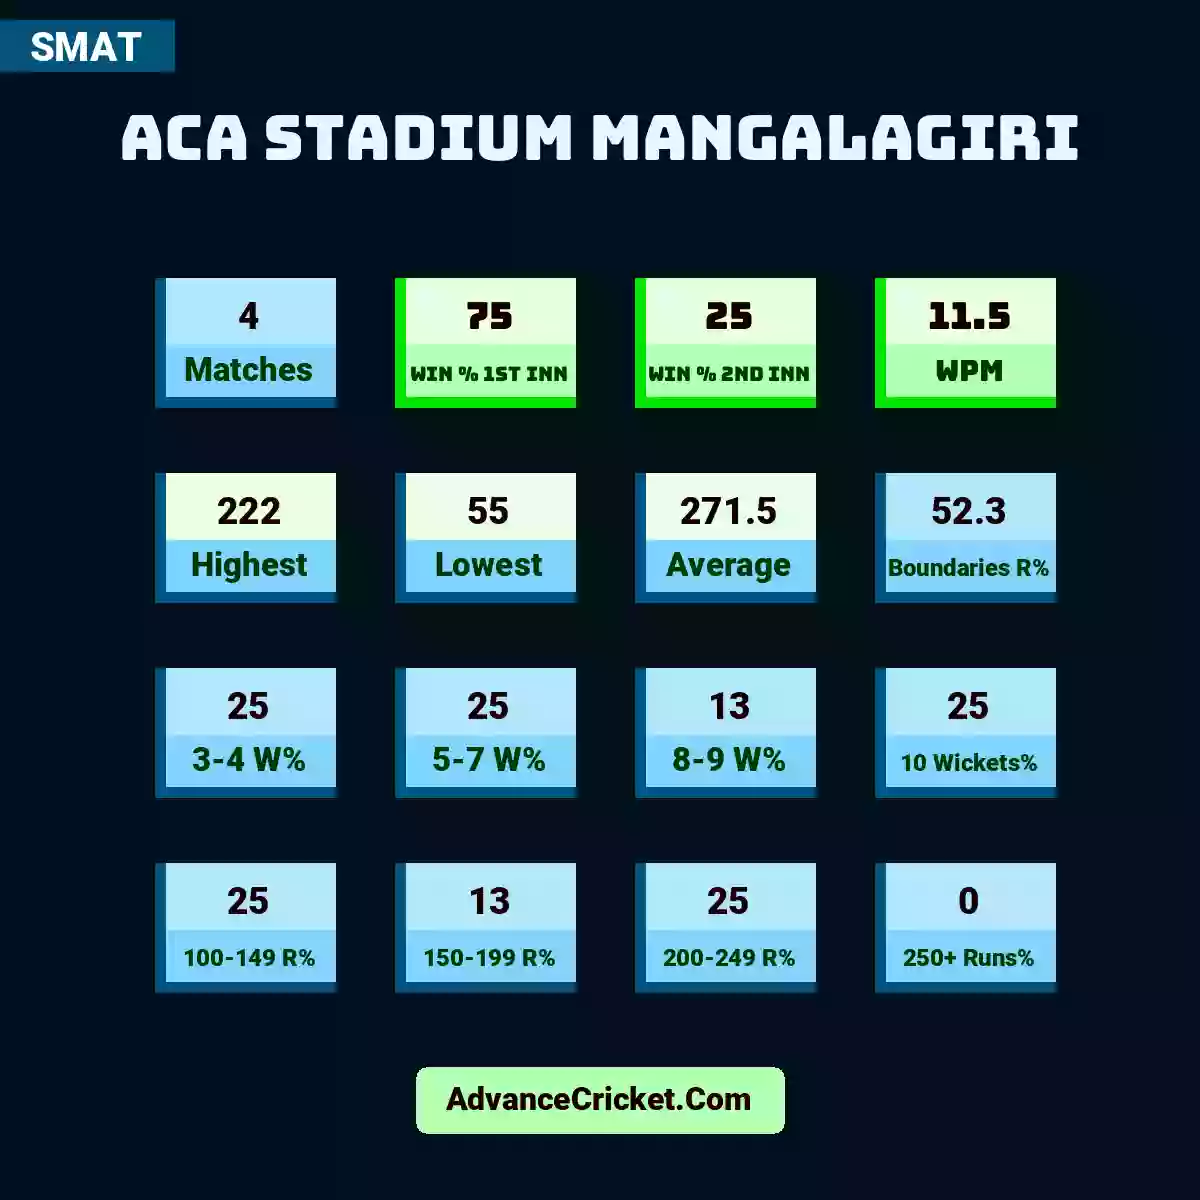 Image showing ACA Stadium Mangalagiri with Matches: 4, Win % 1st Inn: 75, Win % 2nd Inn: 25, WPM: 11.5, Highest: 222, Lowest: 55, Average: 271.5, Boundaries R%: 52.3, 3-4 W%: 25, 5-7 W%: 25, 8-9 W%: 13, 10 Wickets%: 25, 100-149 R%: 25, 150-199 R%: 13, 200-249 R%: 25, 250+ Runs%: 0.